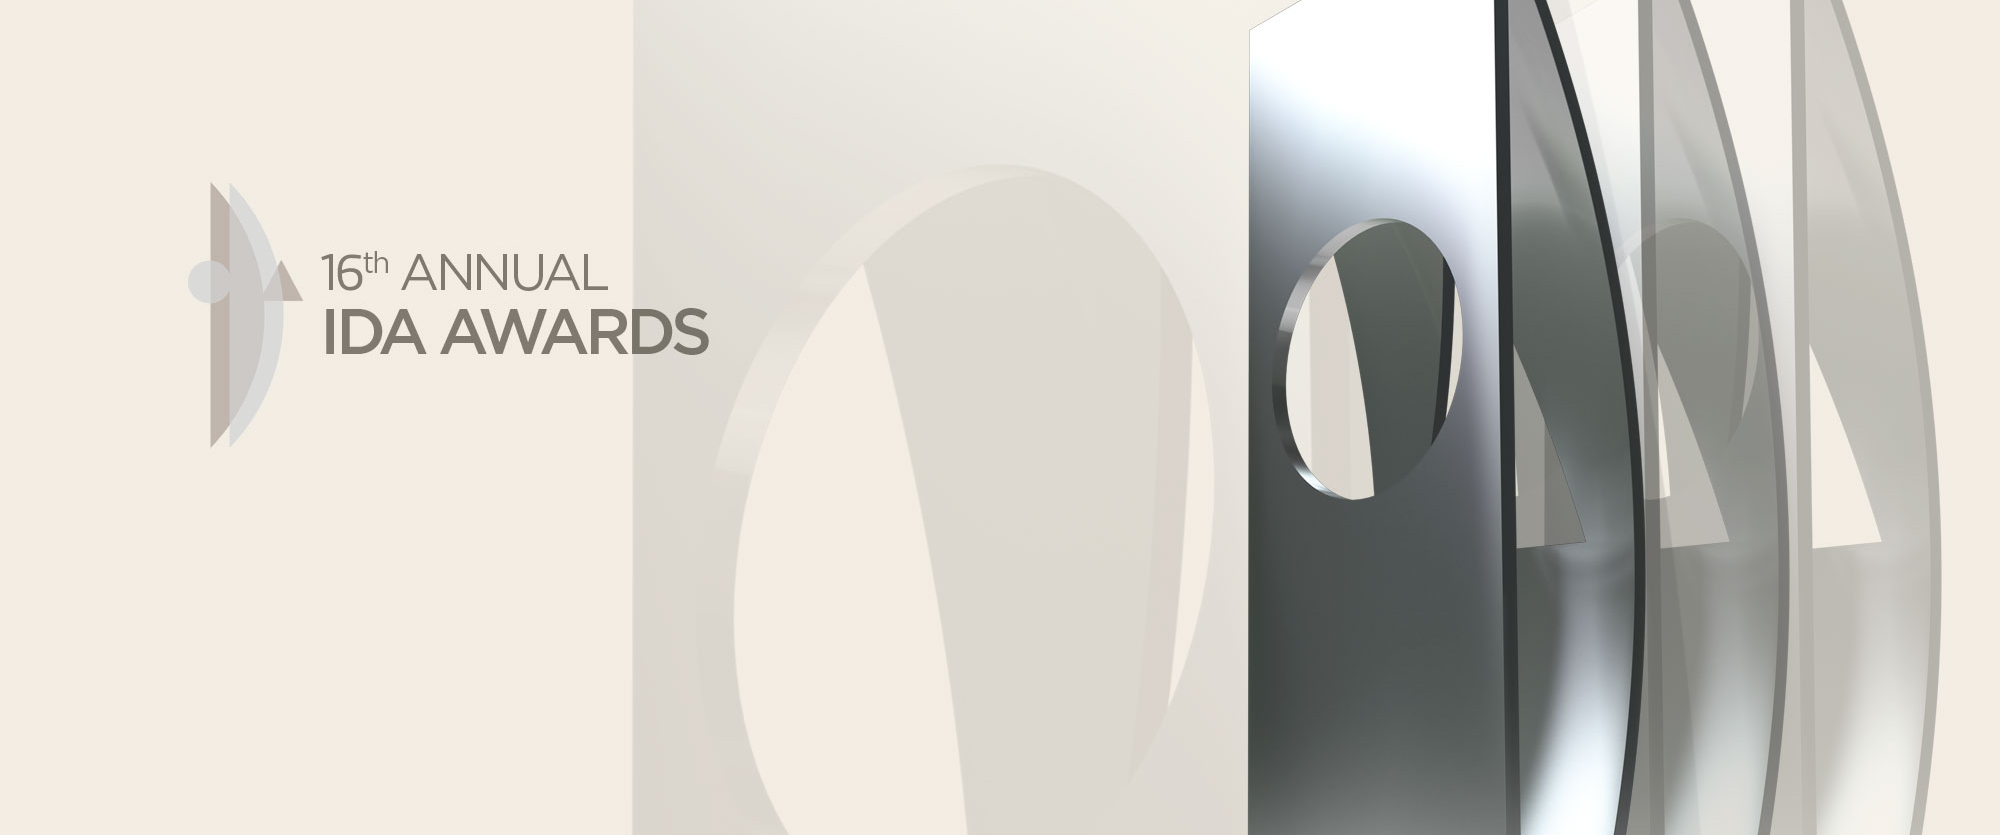 16th Annual International Design Awards Banner